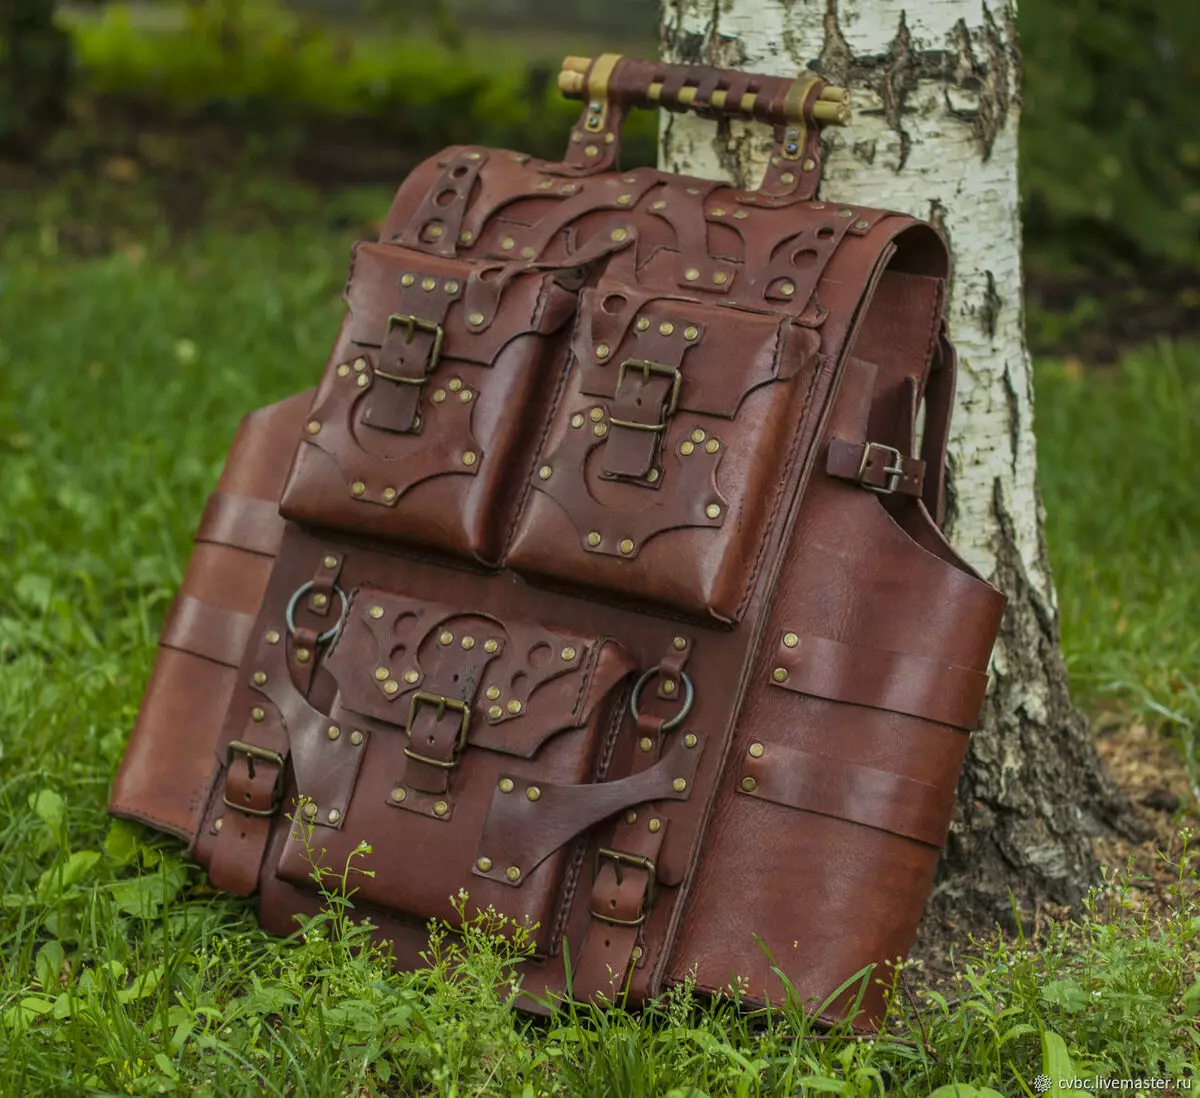 Kožna ruksači (97 fotografija): Žene iz originalne kože i eko-stabla, malih i velikih brand modela, urbanih i poslovnih, elegantnih i modernih ruksaka 2563_87